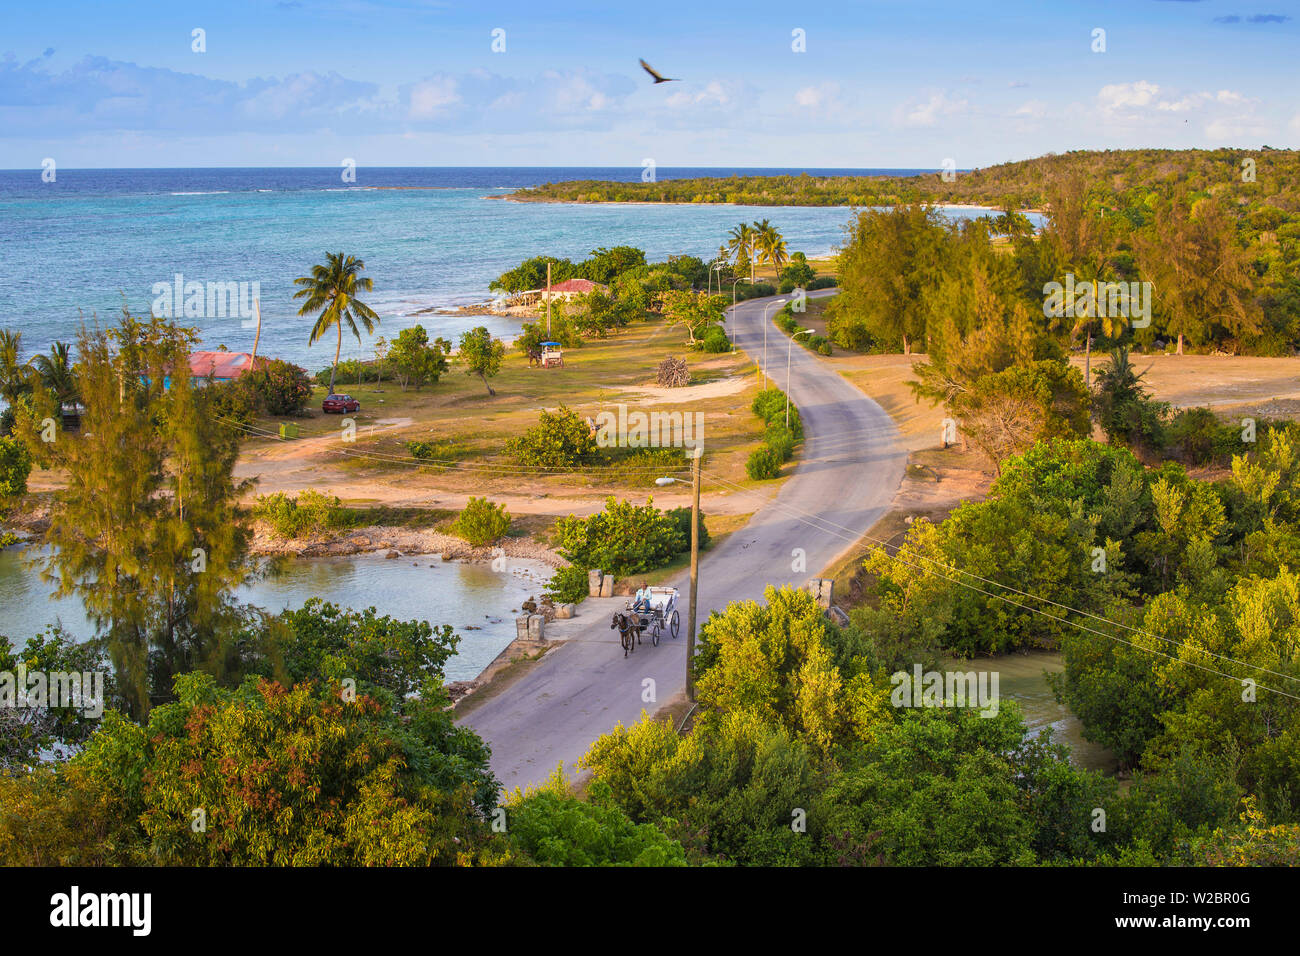 Cuba, Holguin Province, Horse and cart on coastal road at Playa Guardalvaca Stock Photo